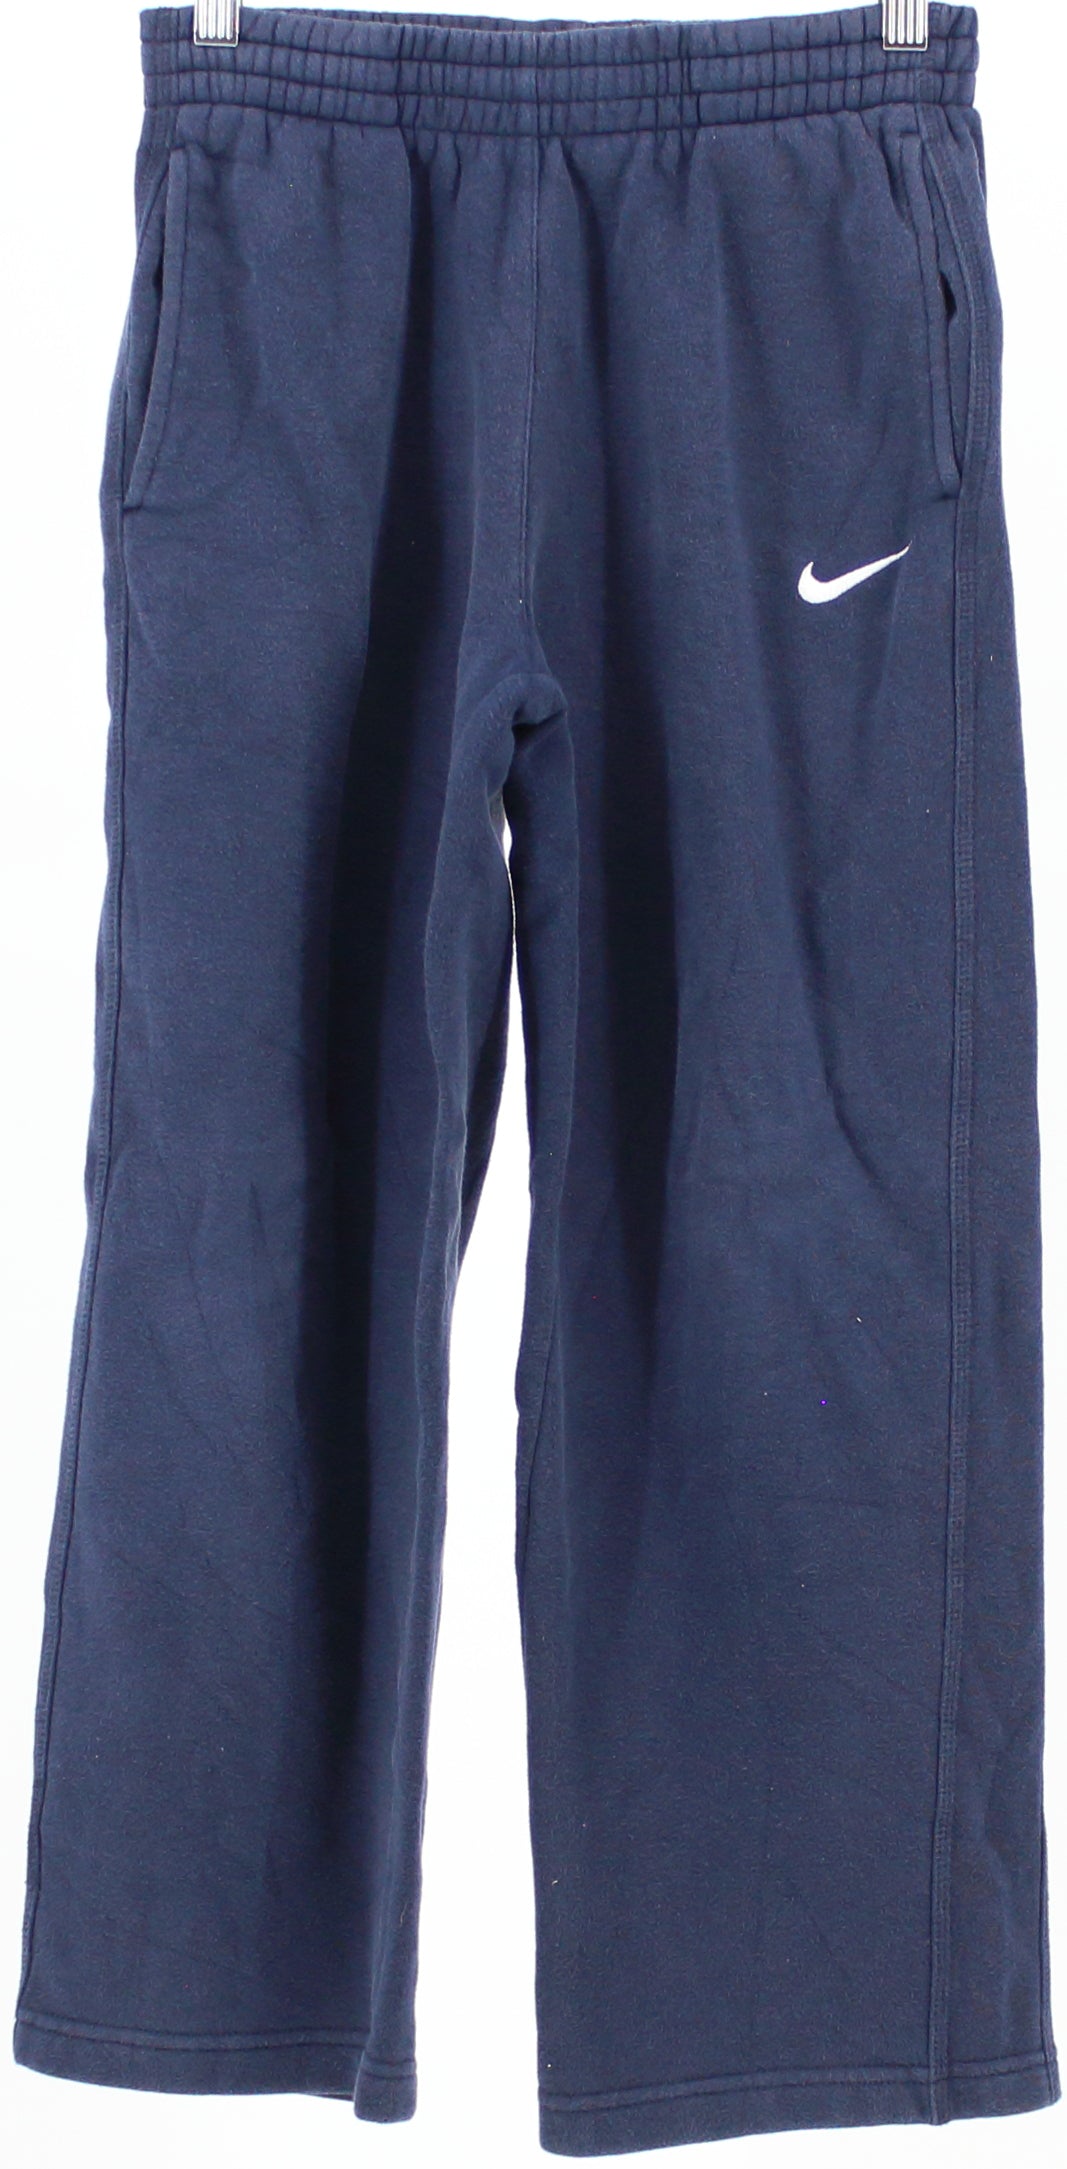 Nike Navy Blue Sweatpants